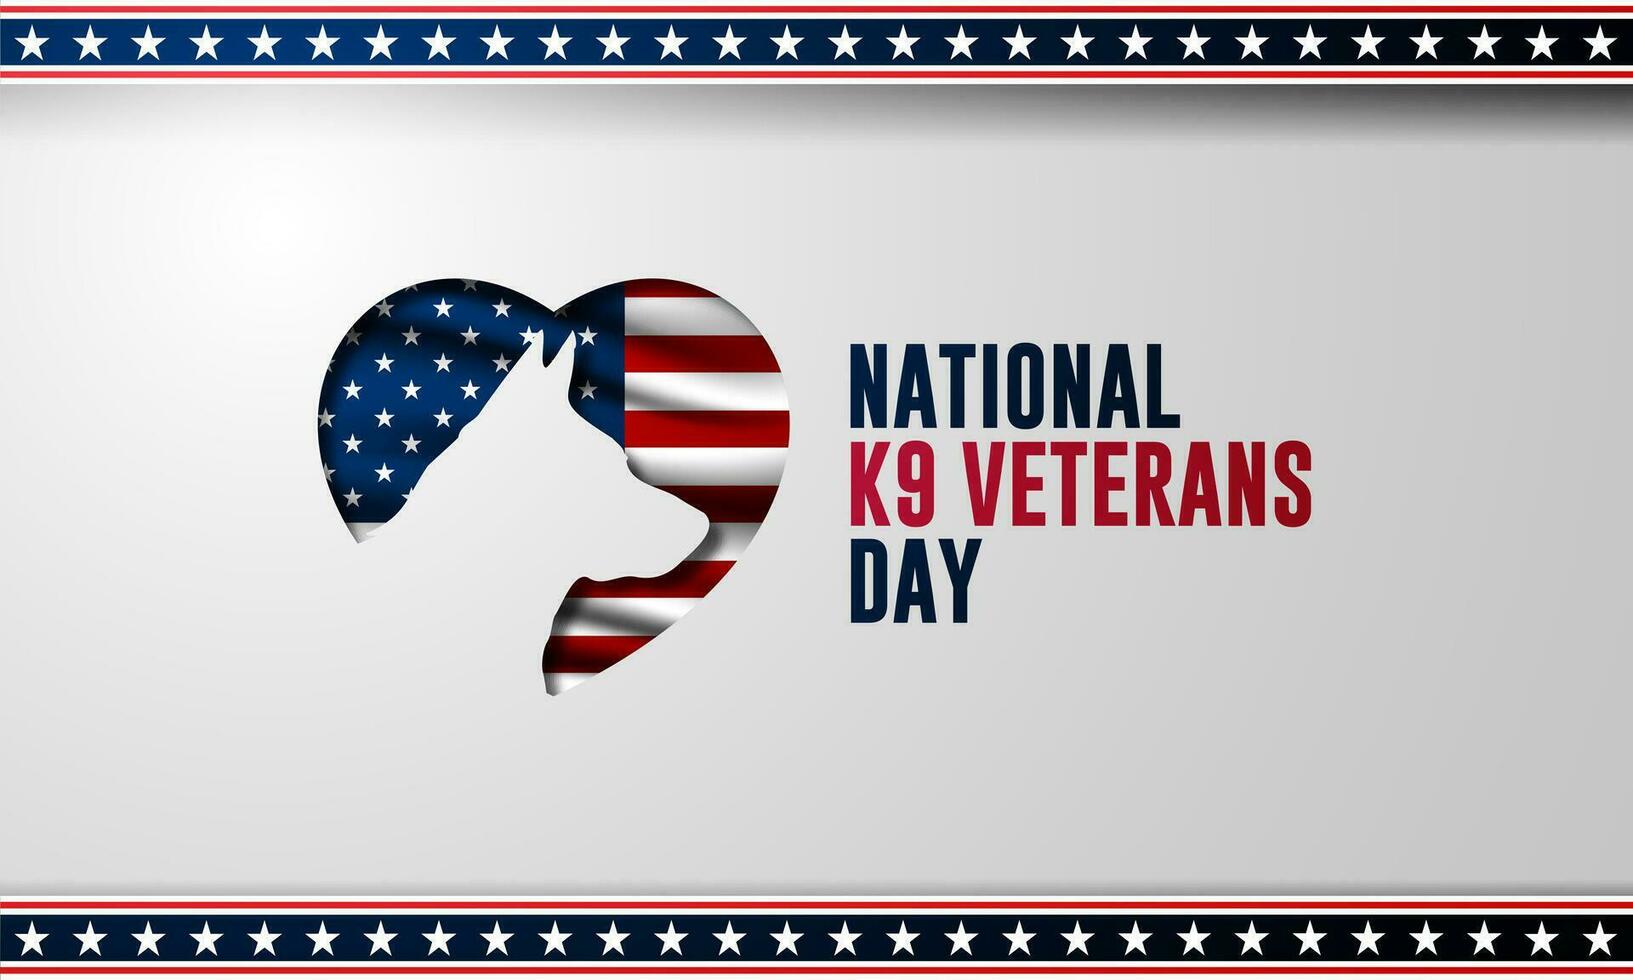 National K9 Veterans Day Background Vector Illustration